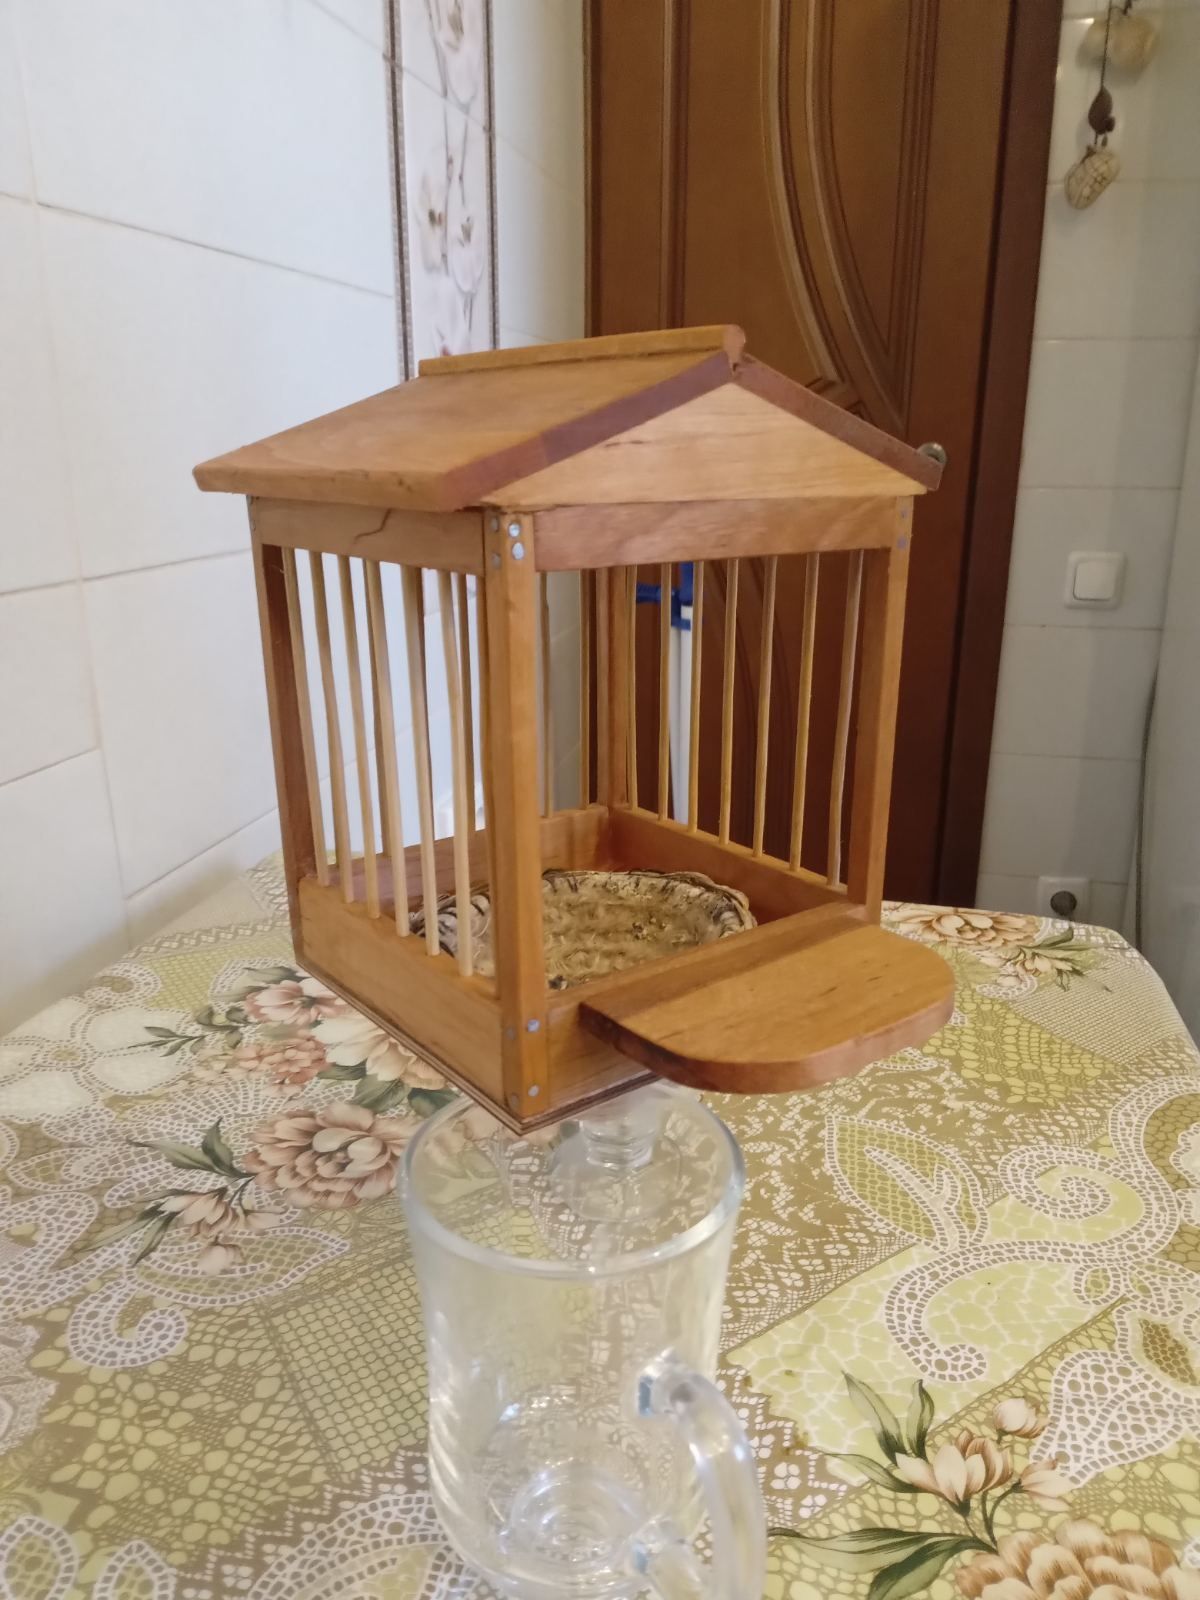 Деревянный домик, гнездо для птиц